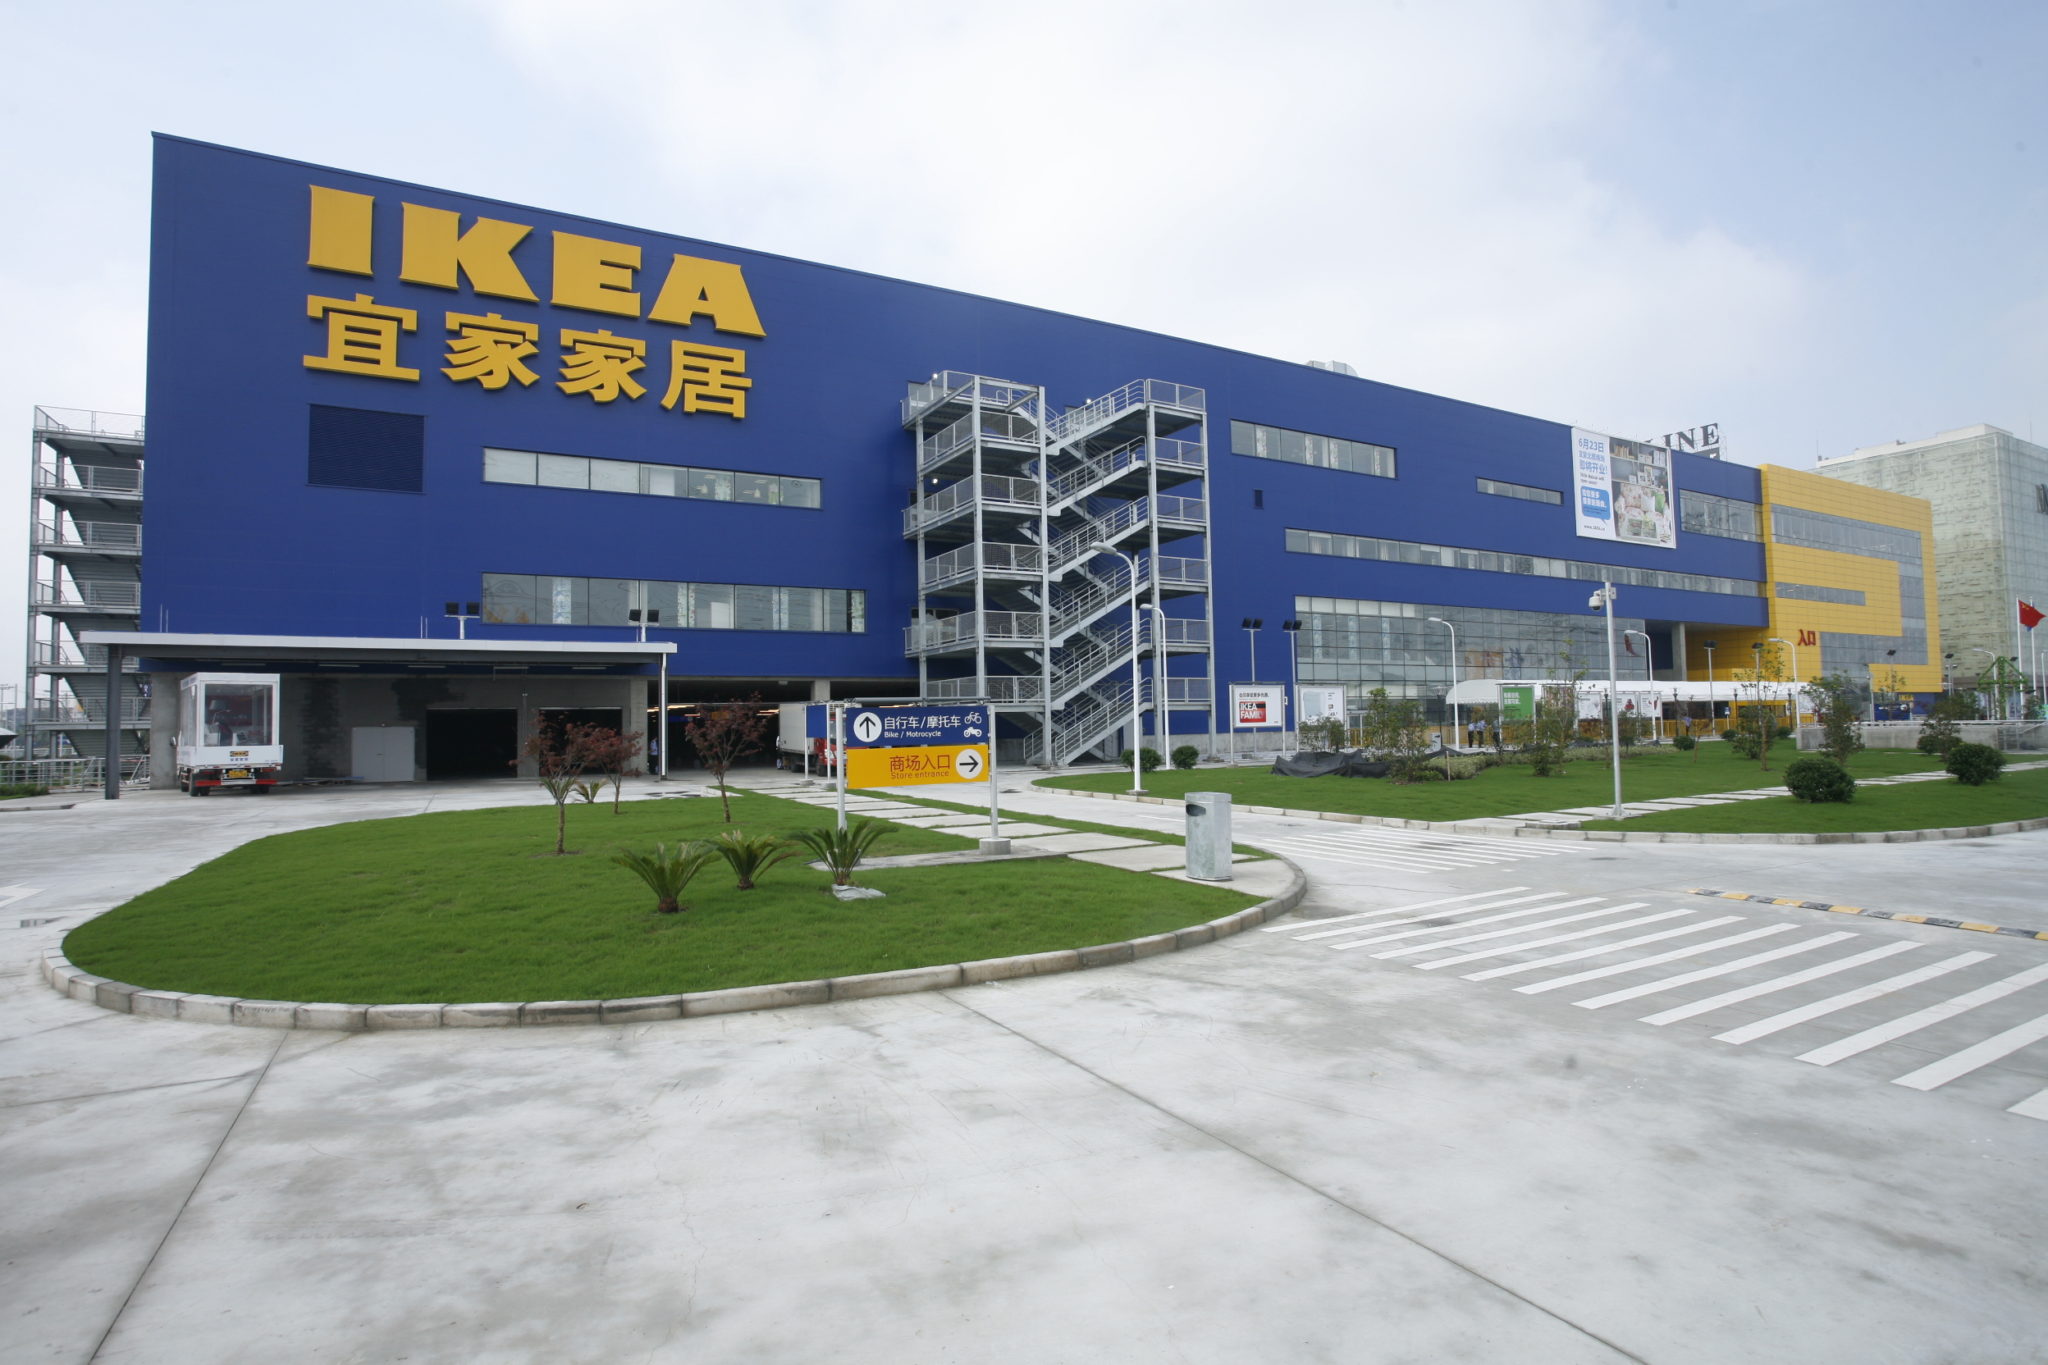 IKEA China: How Big Furniture Retail Adapts the Market